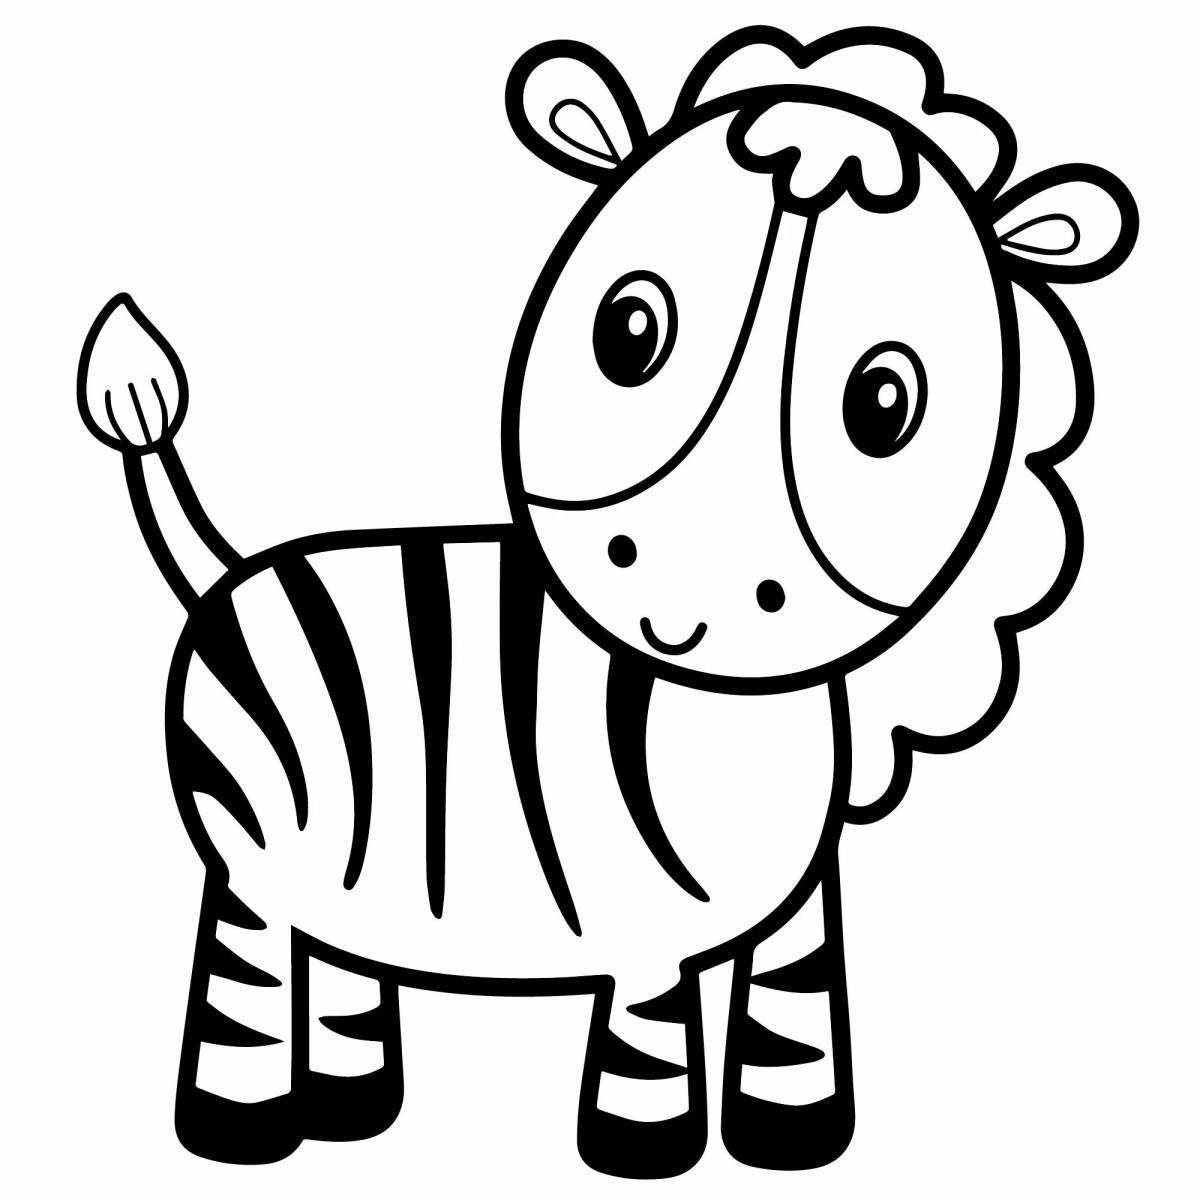 Bright zebra coloring for kids